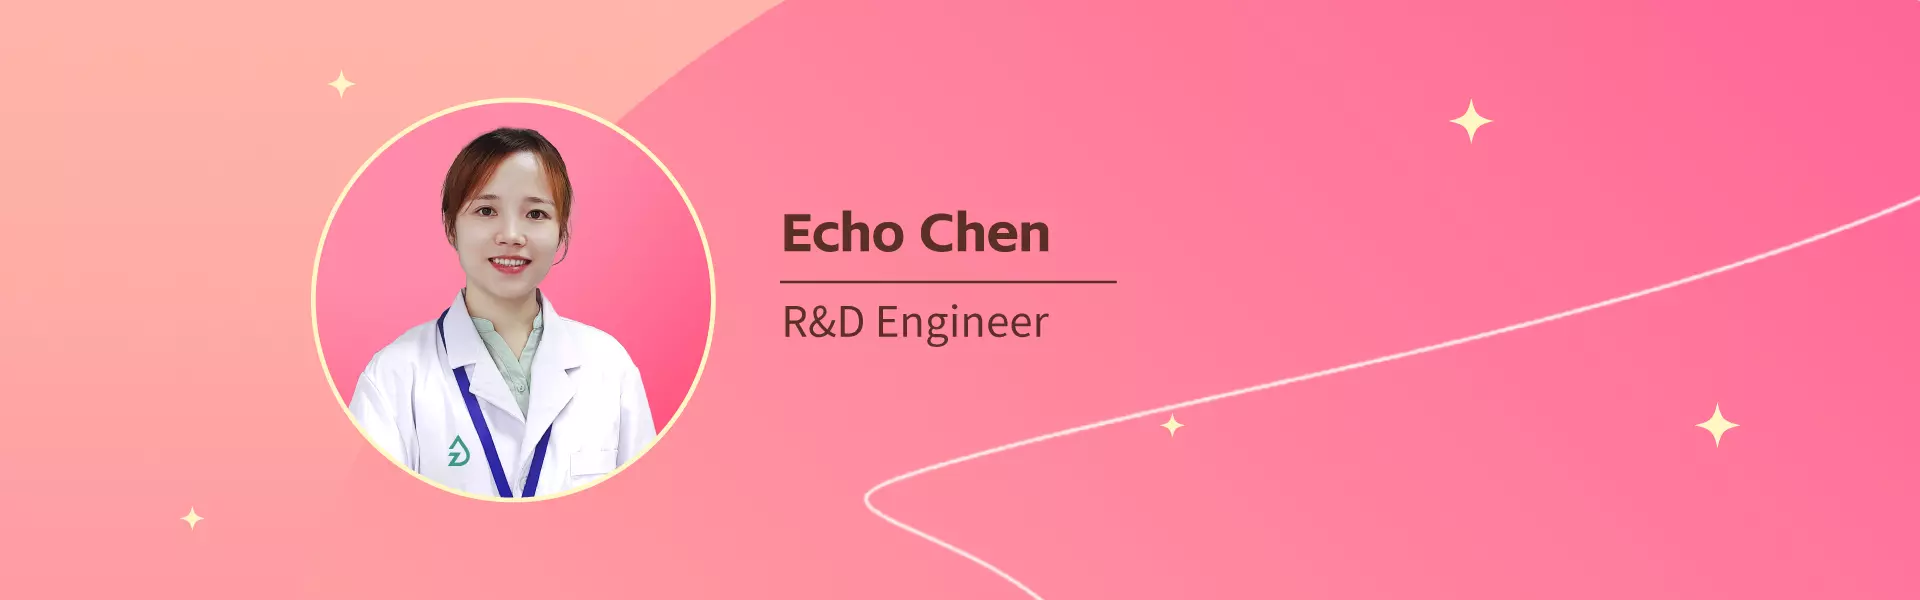 Echo Chen  Zinwi R&D Engineer